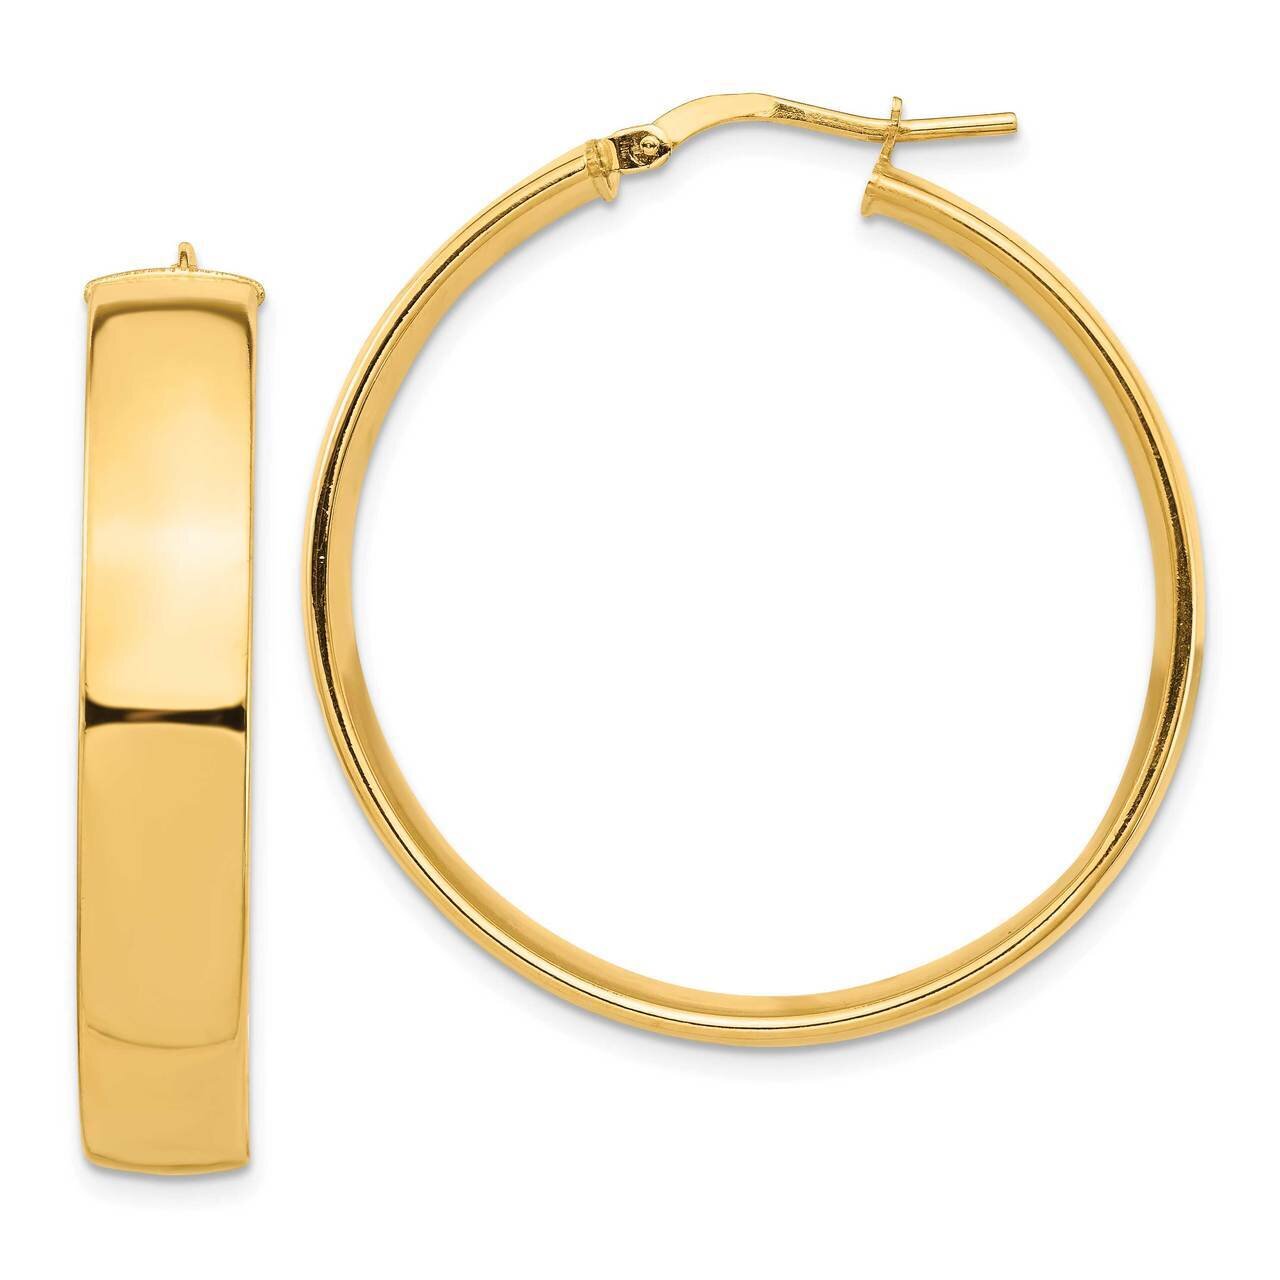 7mm Hoop Earrings 14k Gold High Polished TF1415